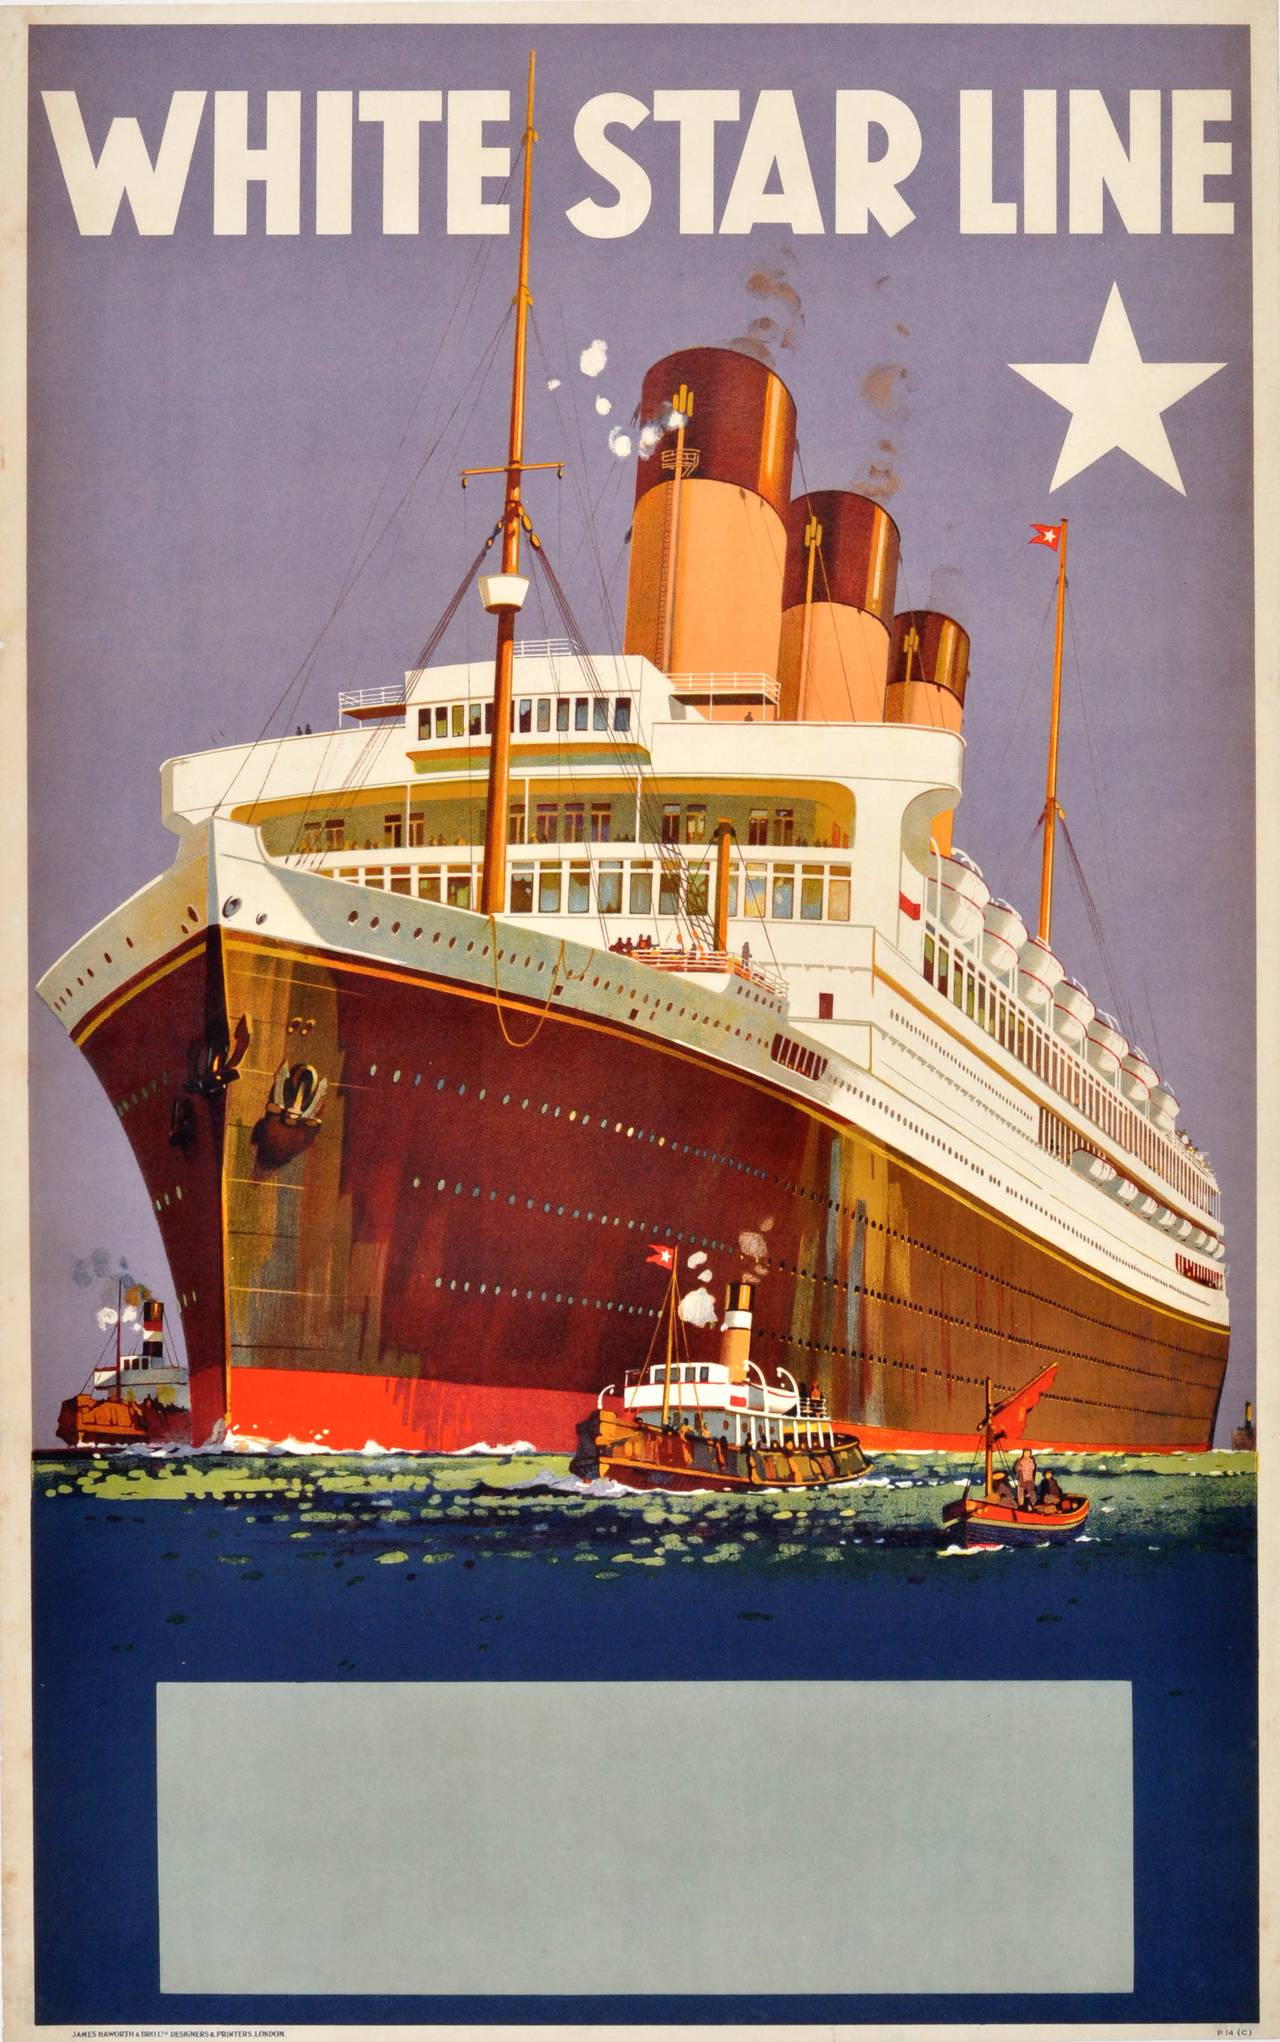 Sunshine Cruises  Vintage Ocean Liner Travel Art Poster Print